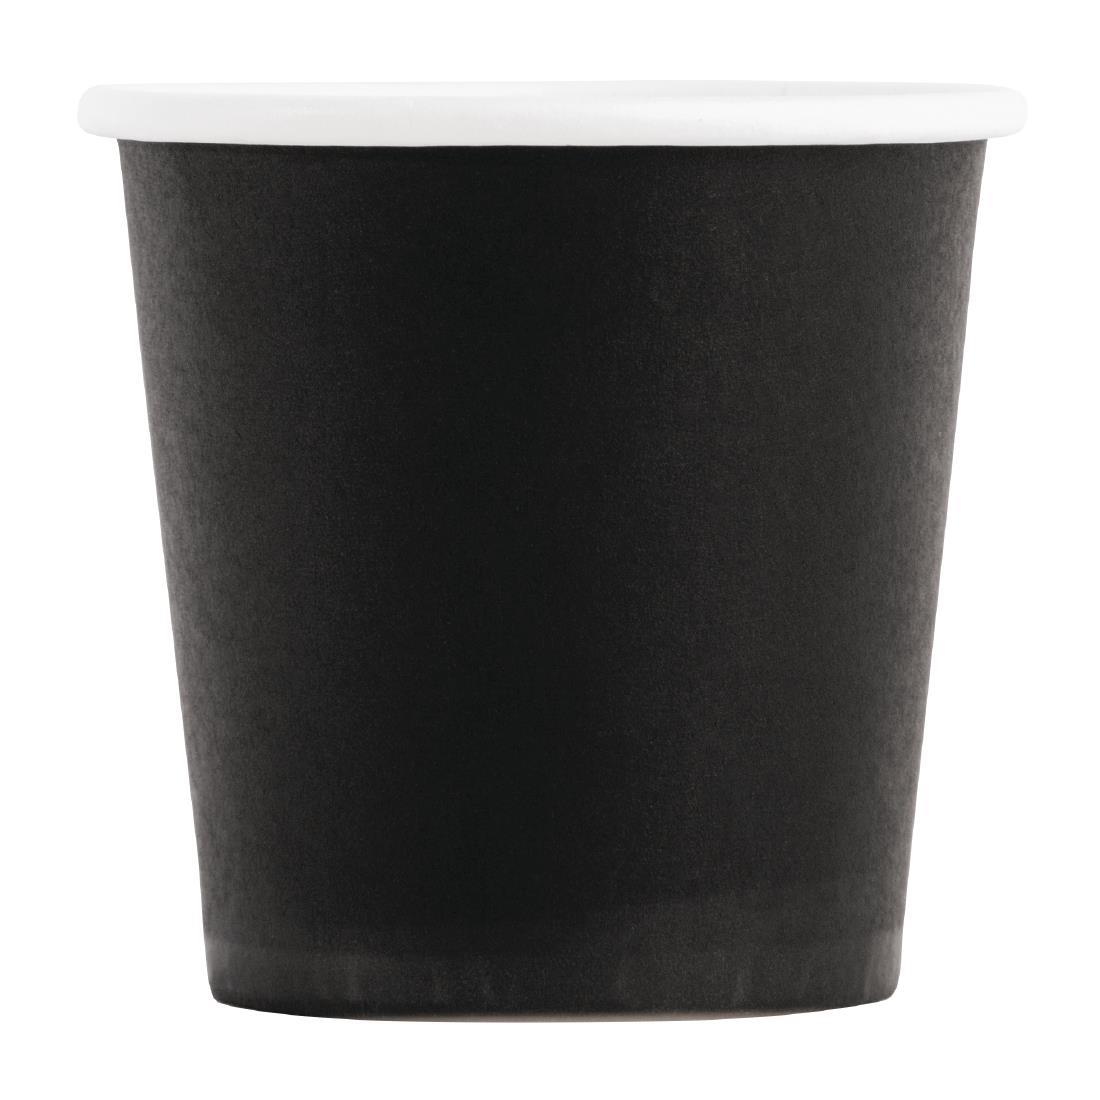 Fiesta Recyclable Espresso Cups Single Wall Black 112ml / 4oz (Pack of 50) - GF019  - 2